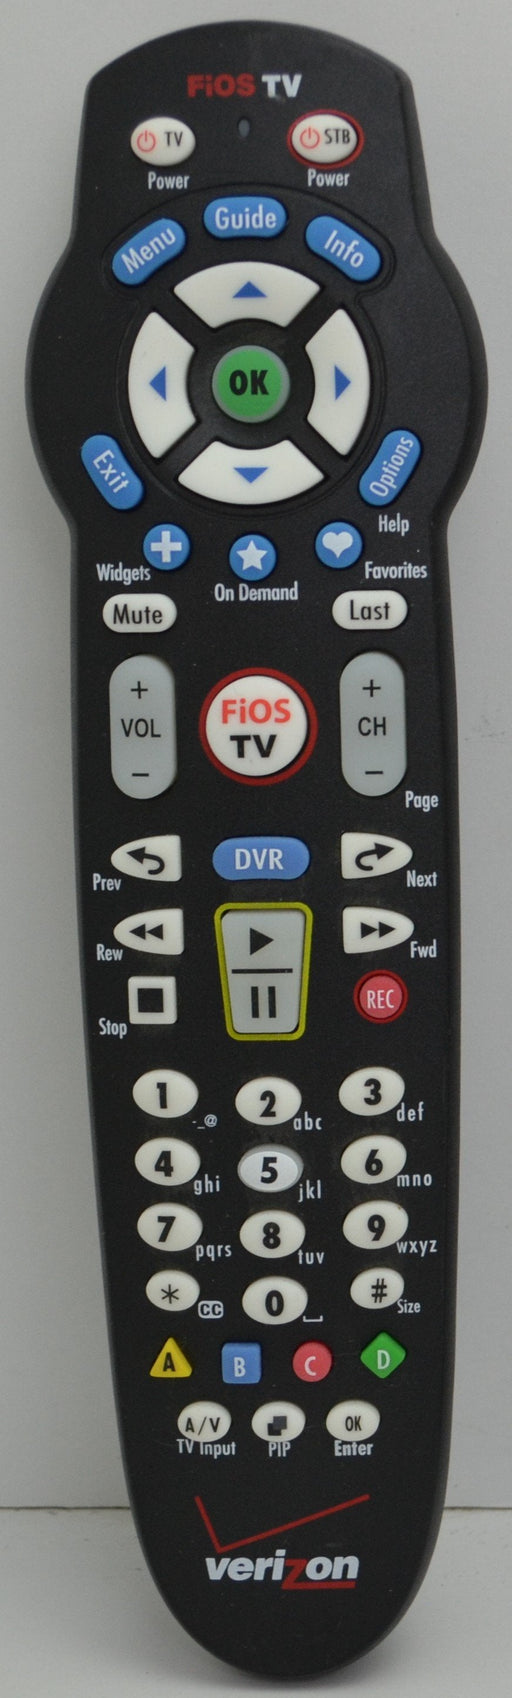 Verizon VZ P265v3 RC Programmable Remote Control for Cable Television DVR and more-Remote-SpenCertified-refurbished-vintage-electonics